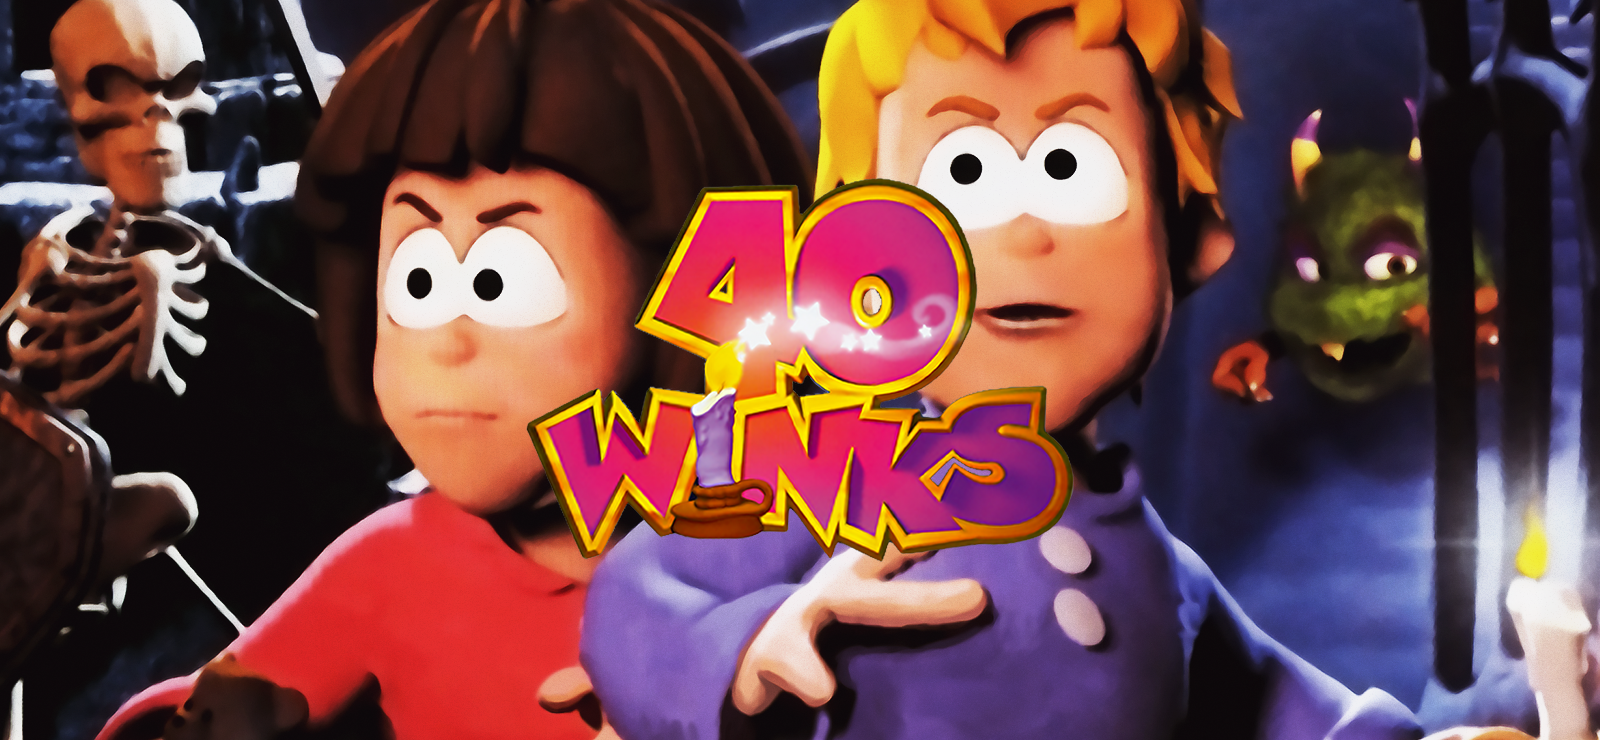 40 Winks